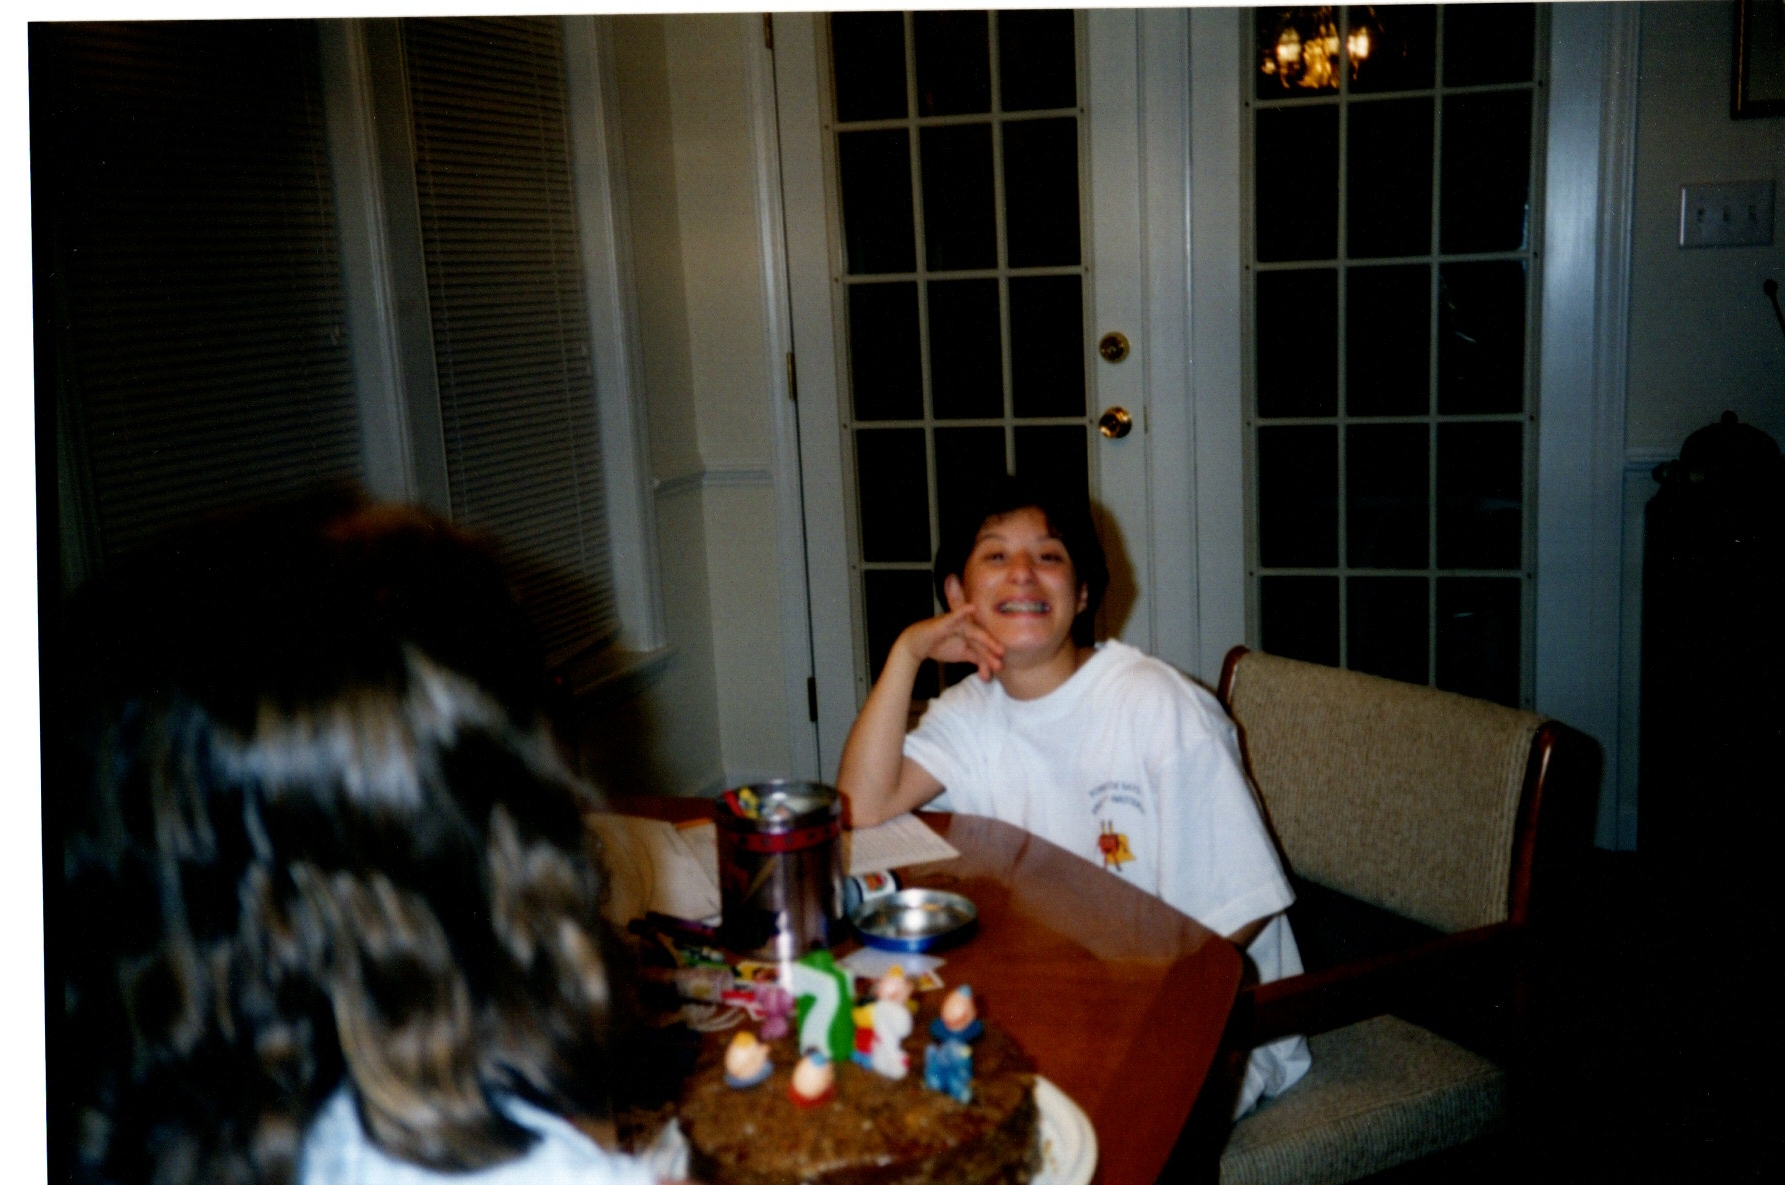 ./1998/11 - Pattie's Birthday/img06152020_472.jpg